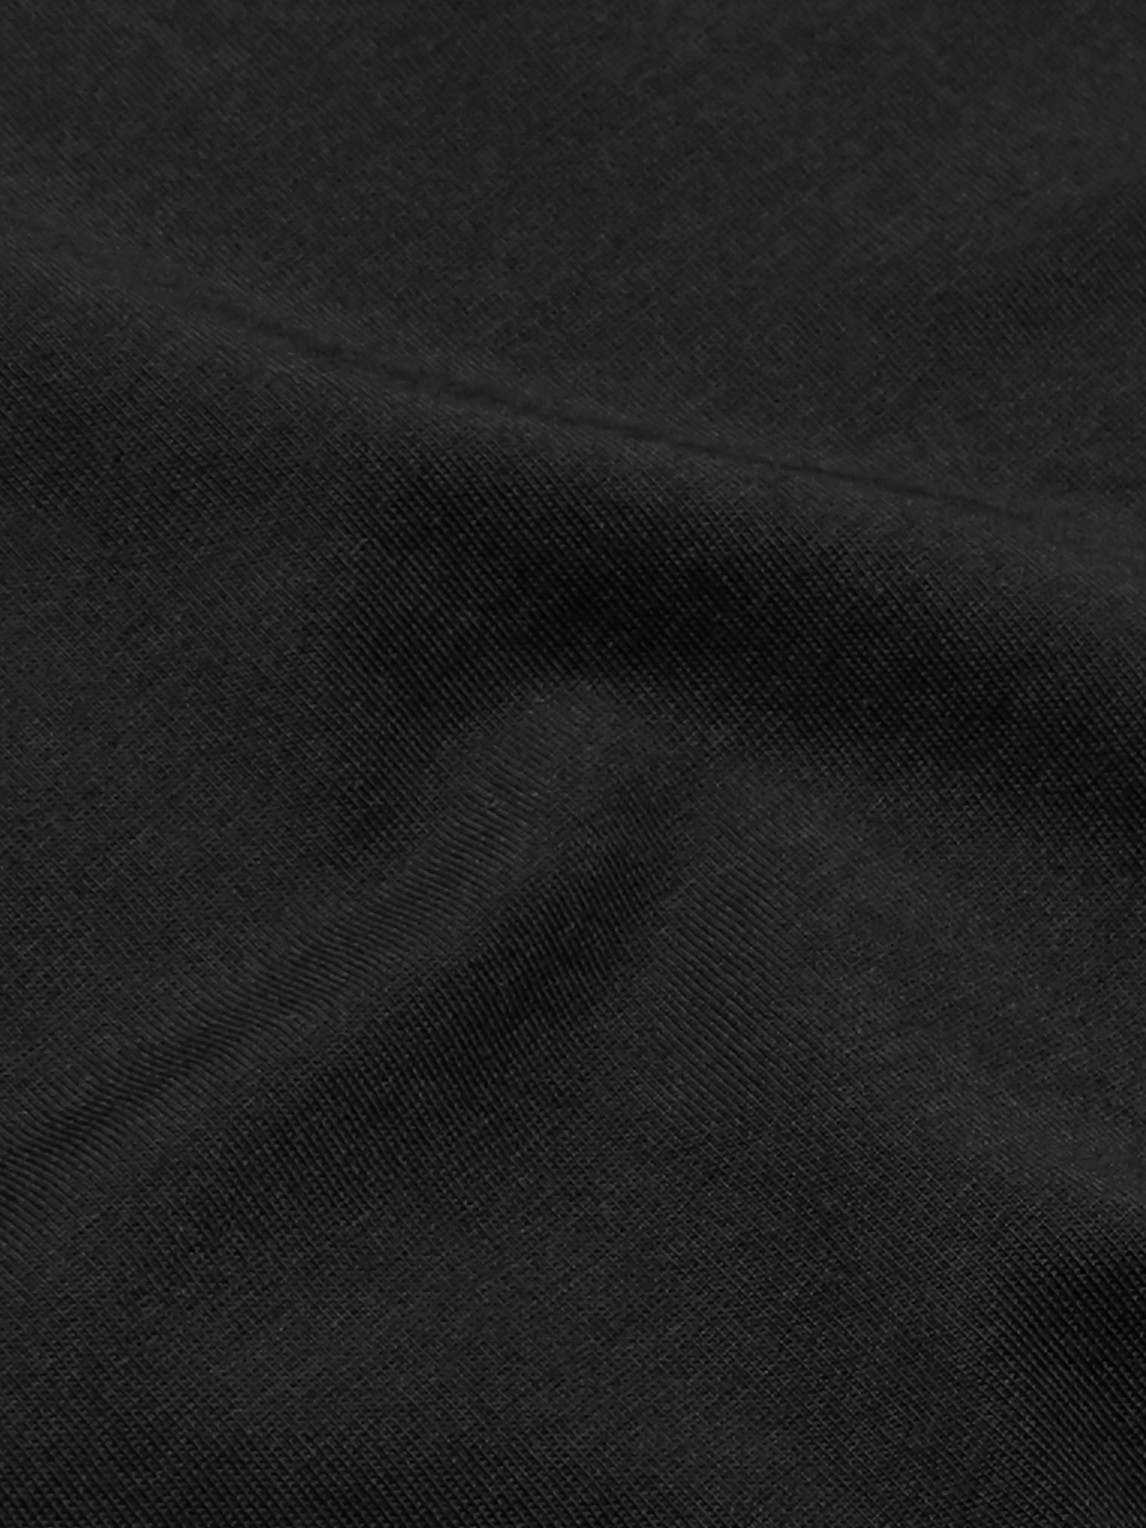 Mr P. Cotton-jersey T-Shirt - Men - Black T-shirts - XS